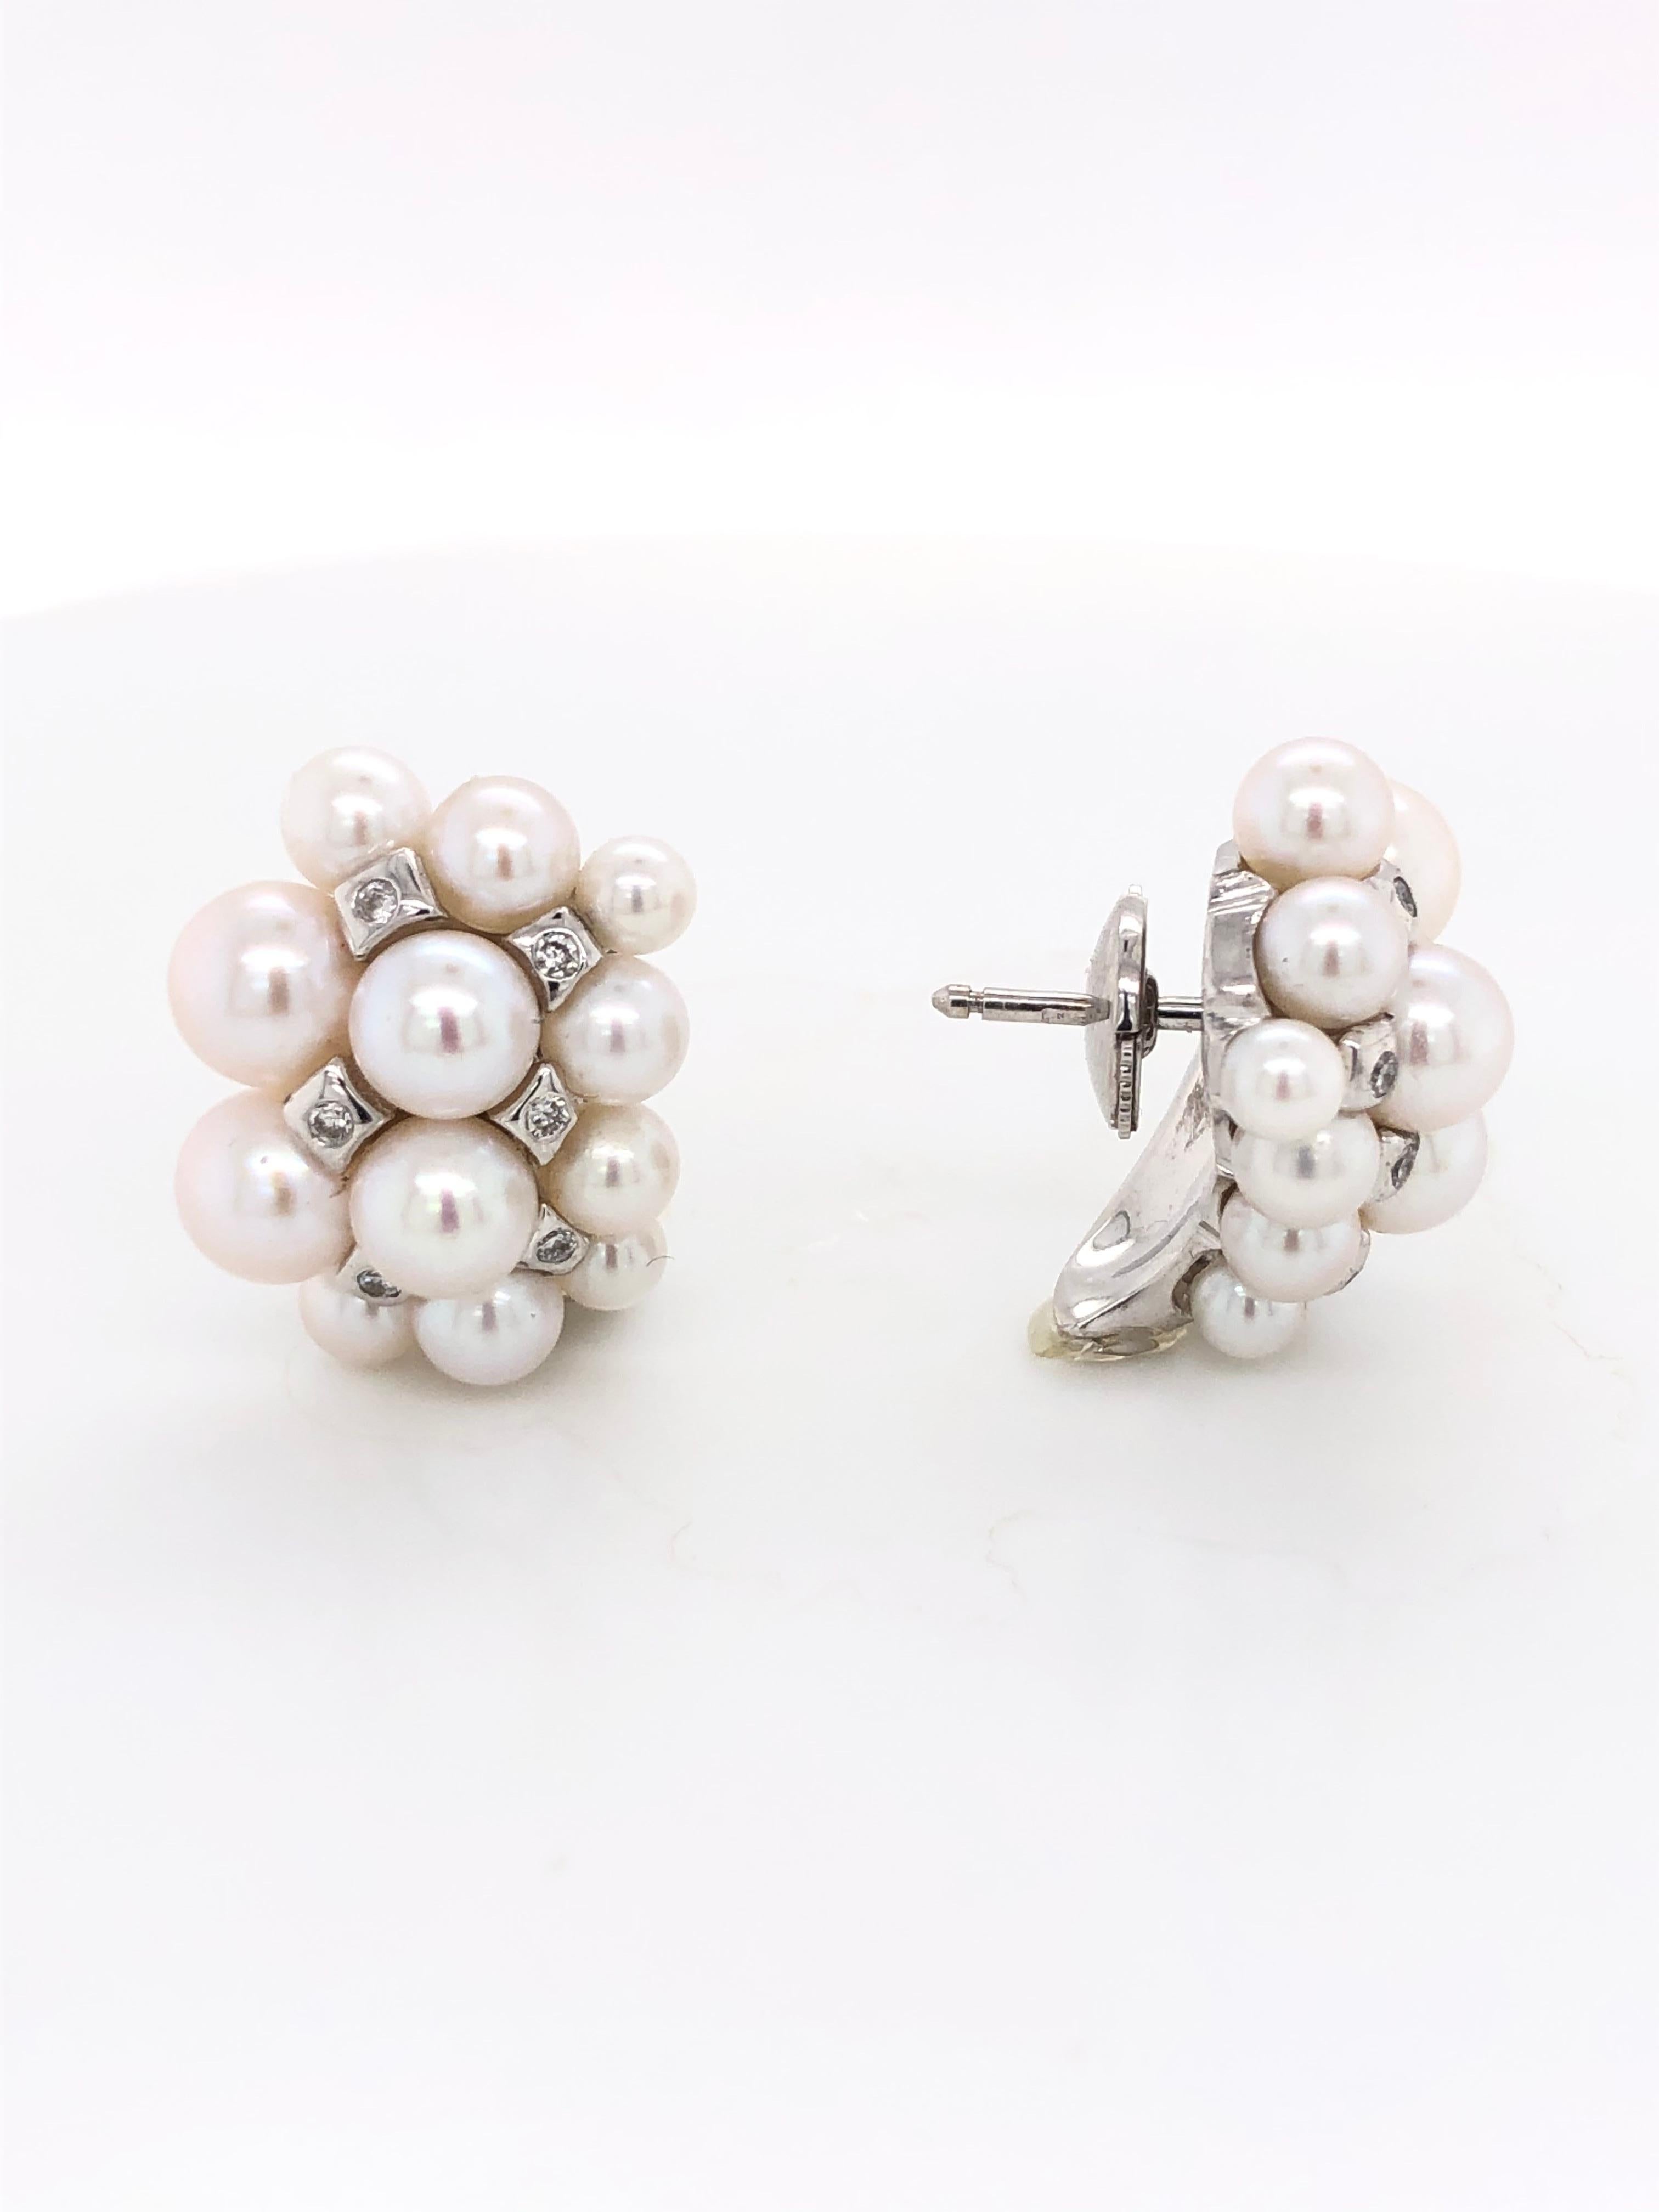 Freshwater pearls with White Diamonds Earrings 
Akoya Pearl Diameter 3.5/ 6 mm 19.89 
White Diamonds 0.18 ct Brillant Cut 
White Gold 18 k : 10.93 grams 

